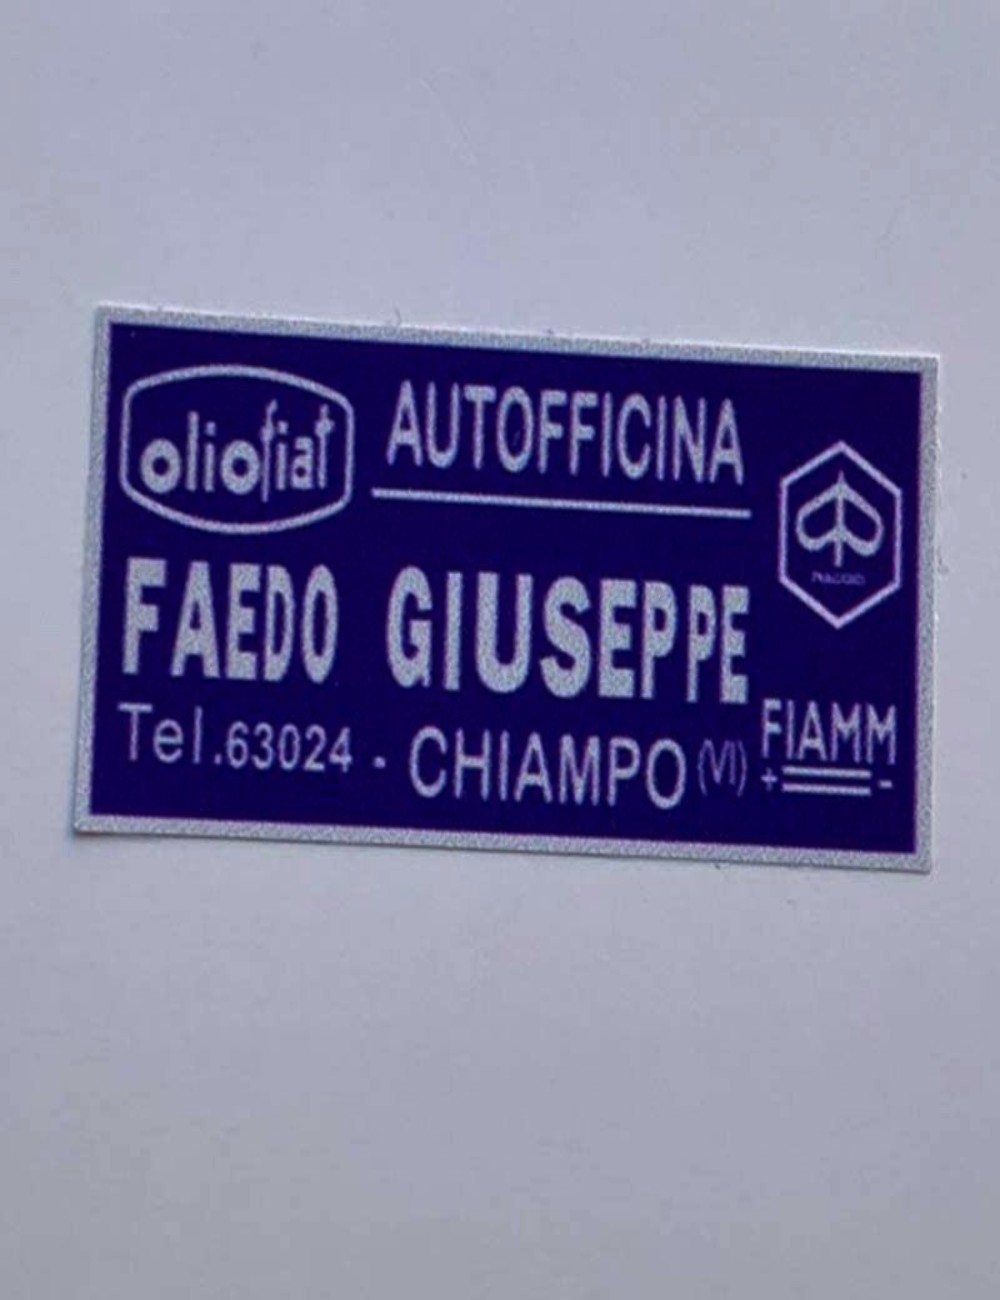 Adesivo concessionario Faedo Giuseppe. Dimensioni: 5,4 cm x 2,4 cm.